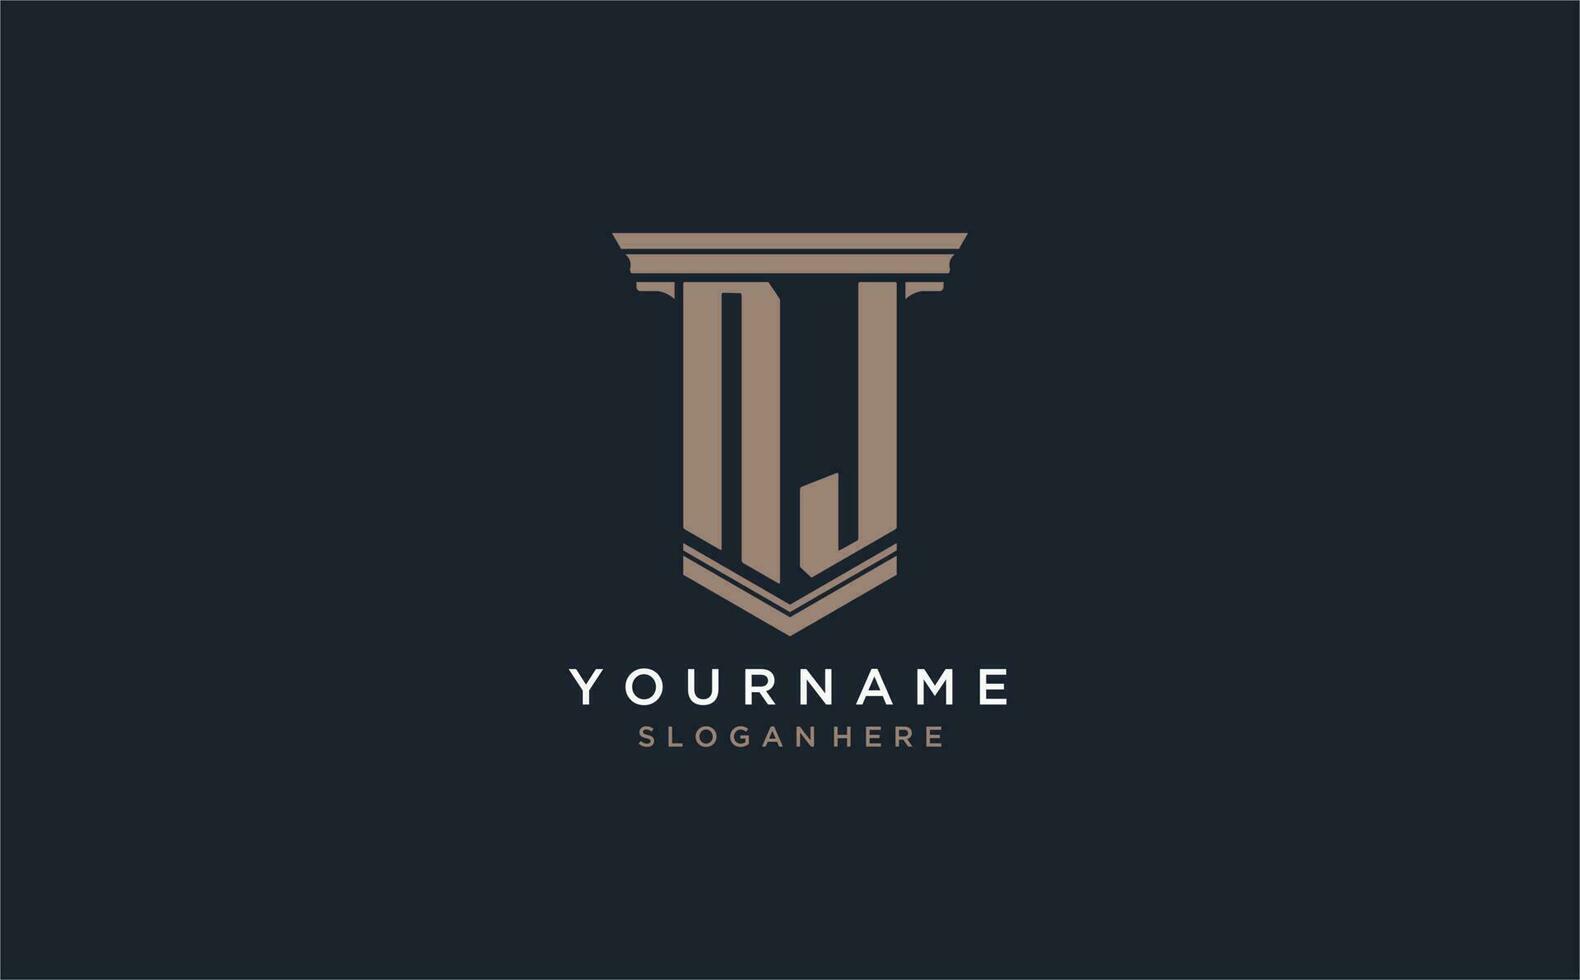 NJ initial logo with pillar style, luxury law firm logo design ideas vector